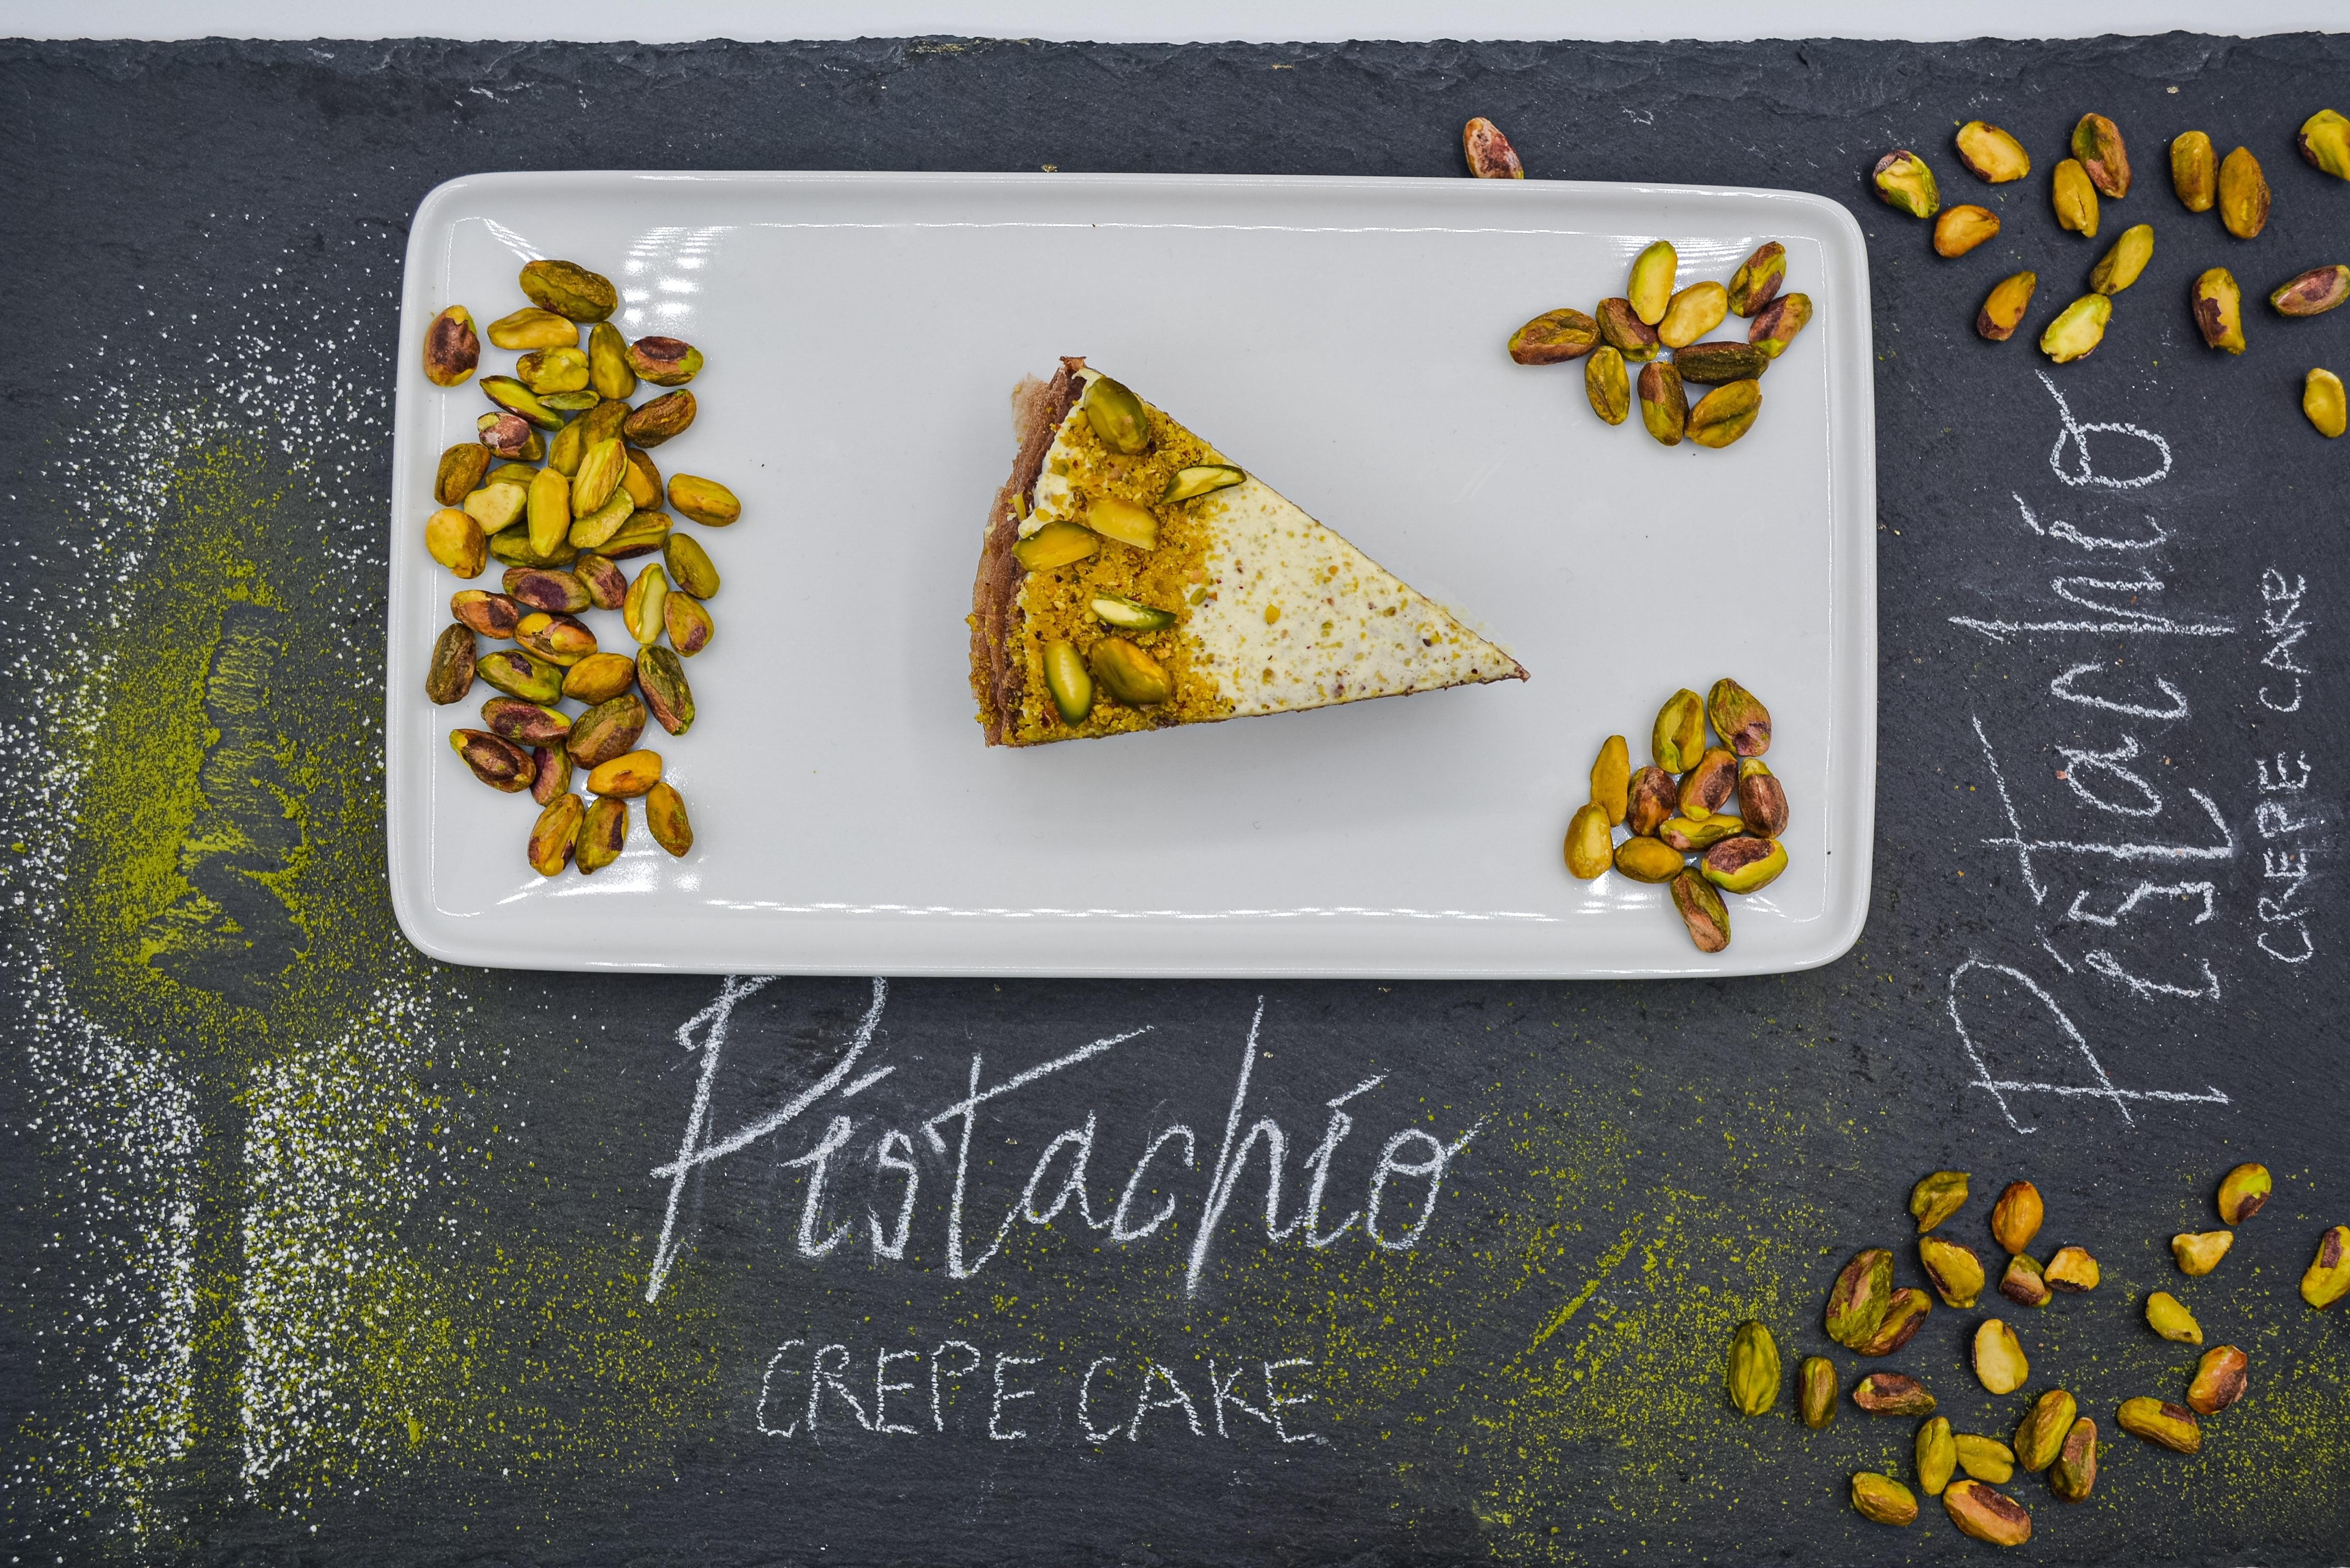 Pistachio Crepe Cake (Slice - Pack of 2)